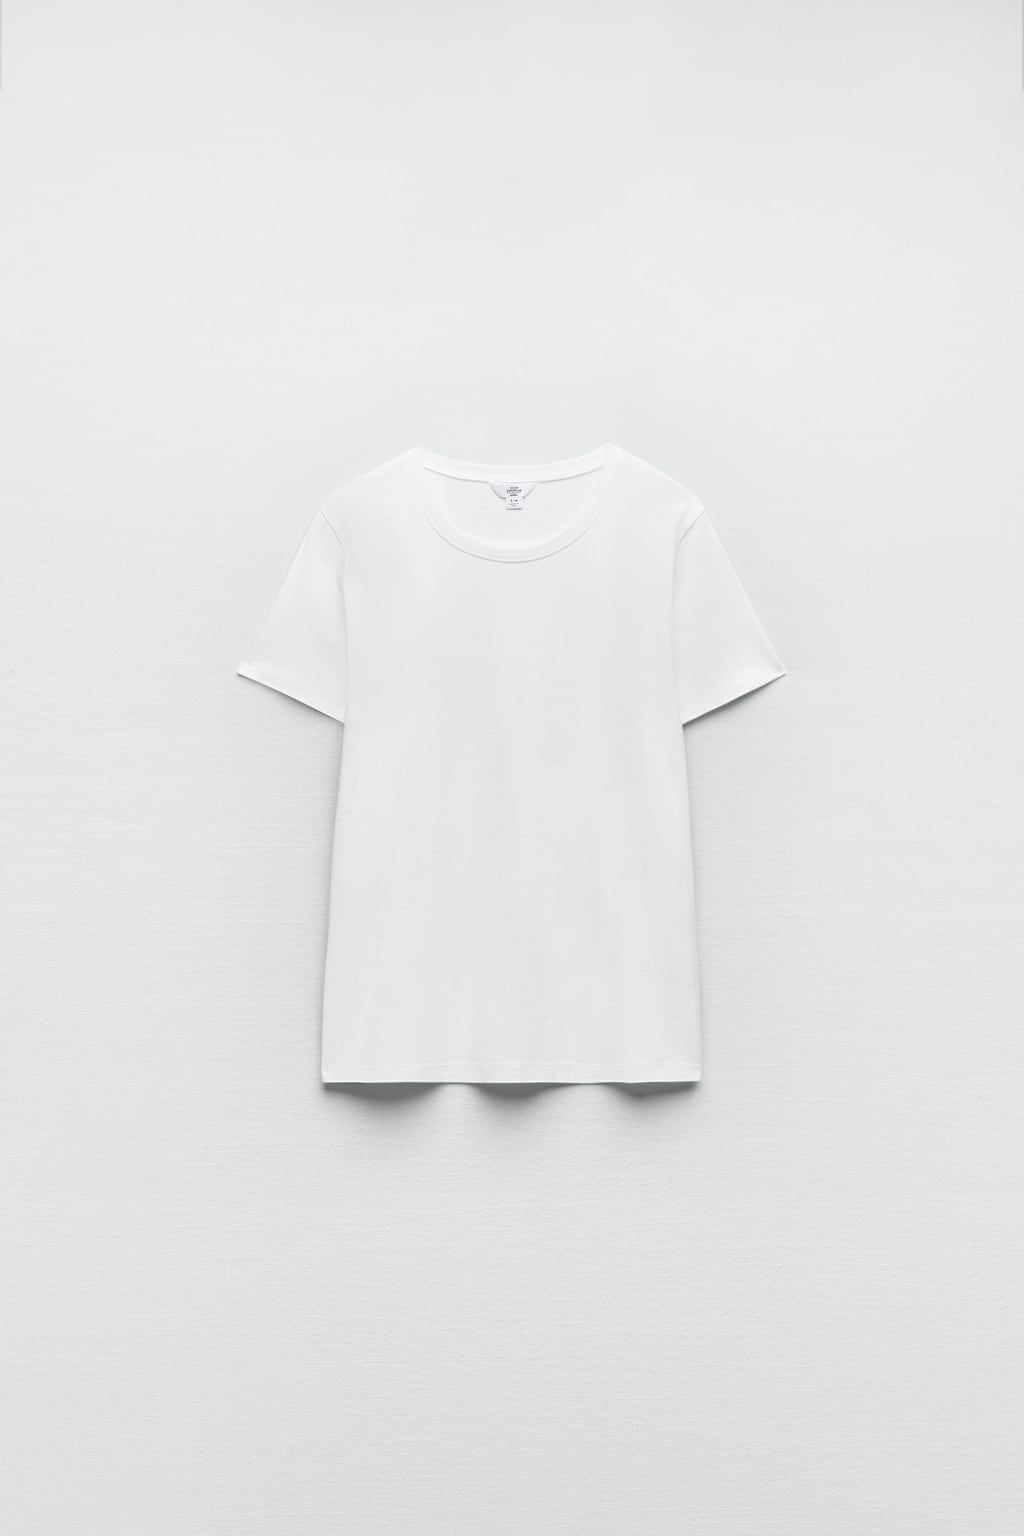 https://flyfiercefab.com/wp-content/uploads/2022/05/Good-American-X-Zara-White-Basic-T-Shirt.png